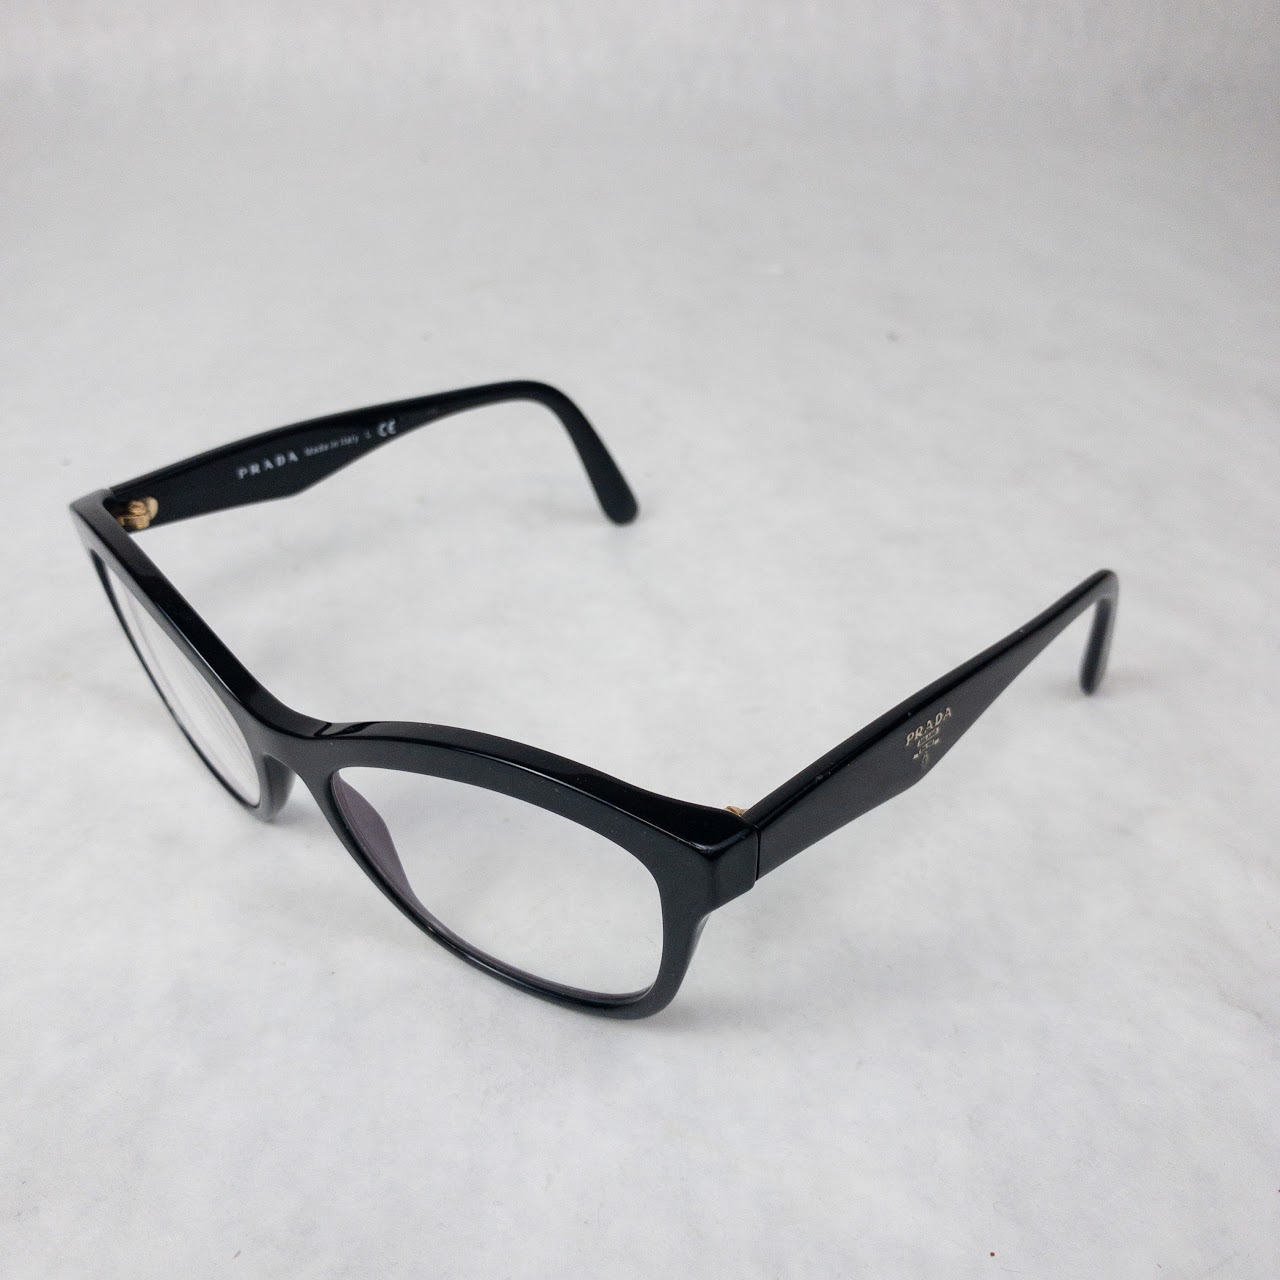 Prada RX Eyeglass Frames